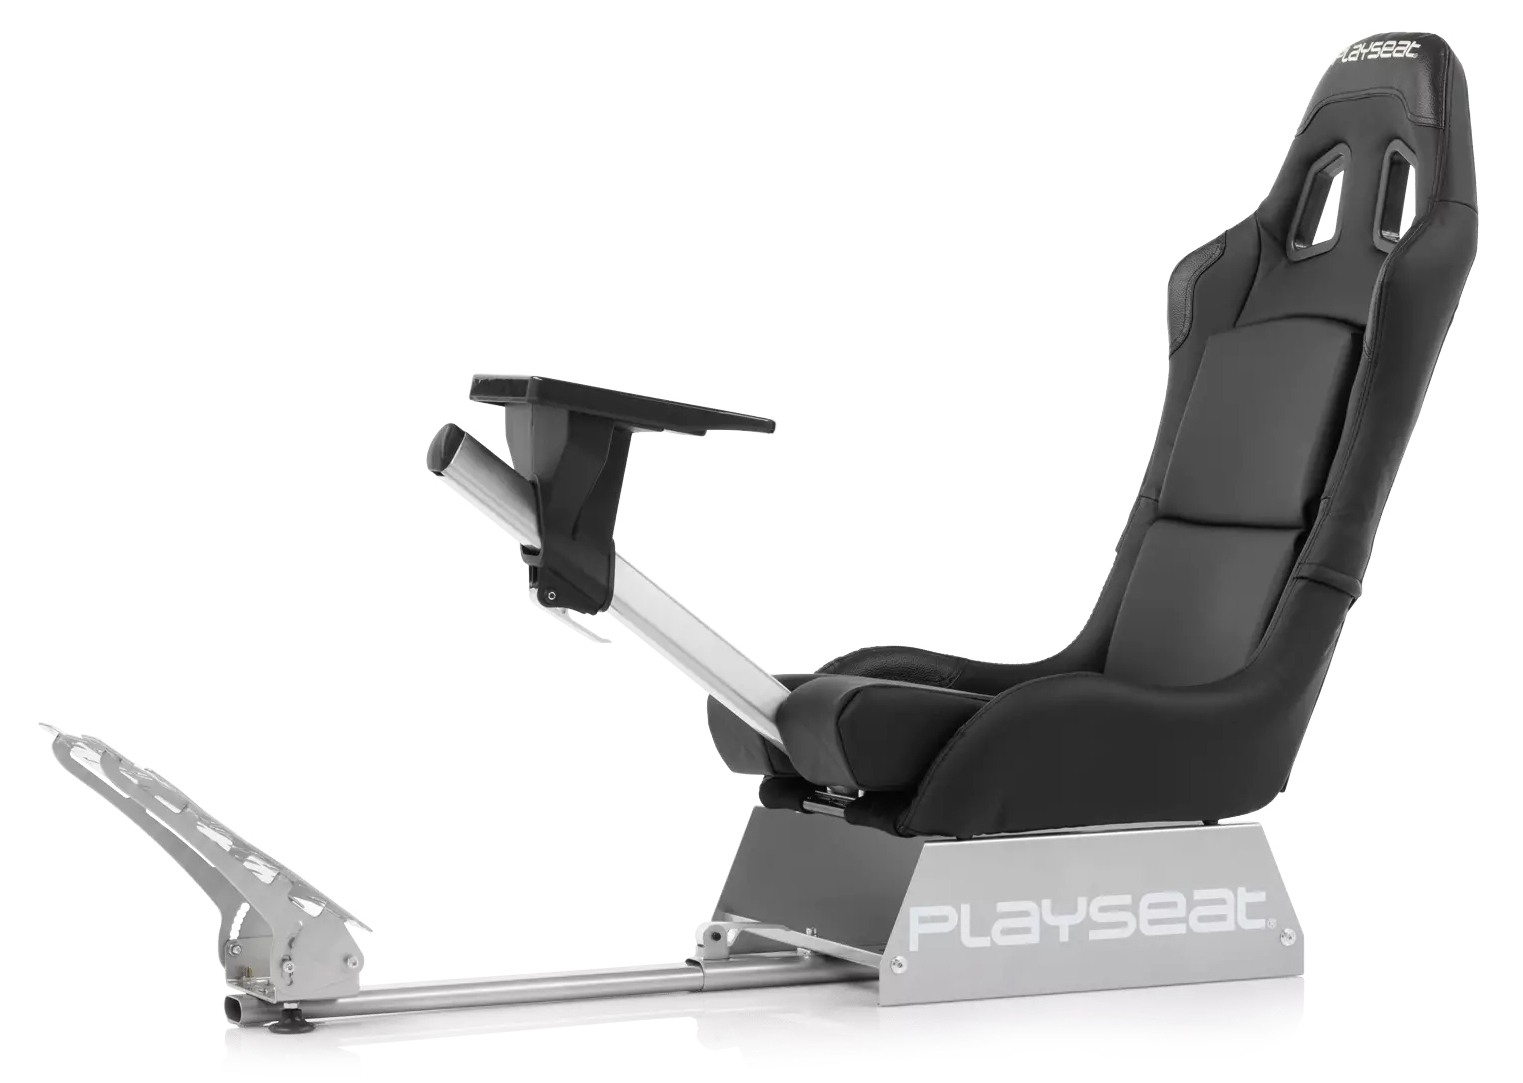 Playseat - Playseat® Revolution Black - Pro Racing Seat - PC - PS